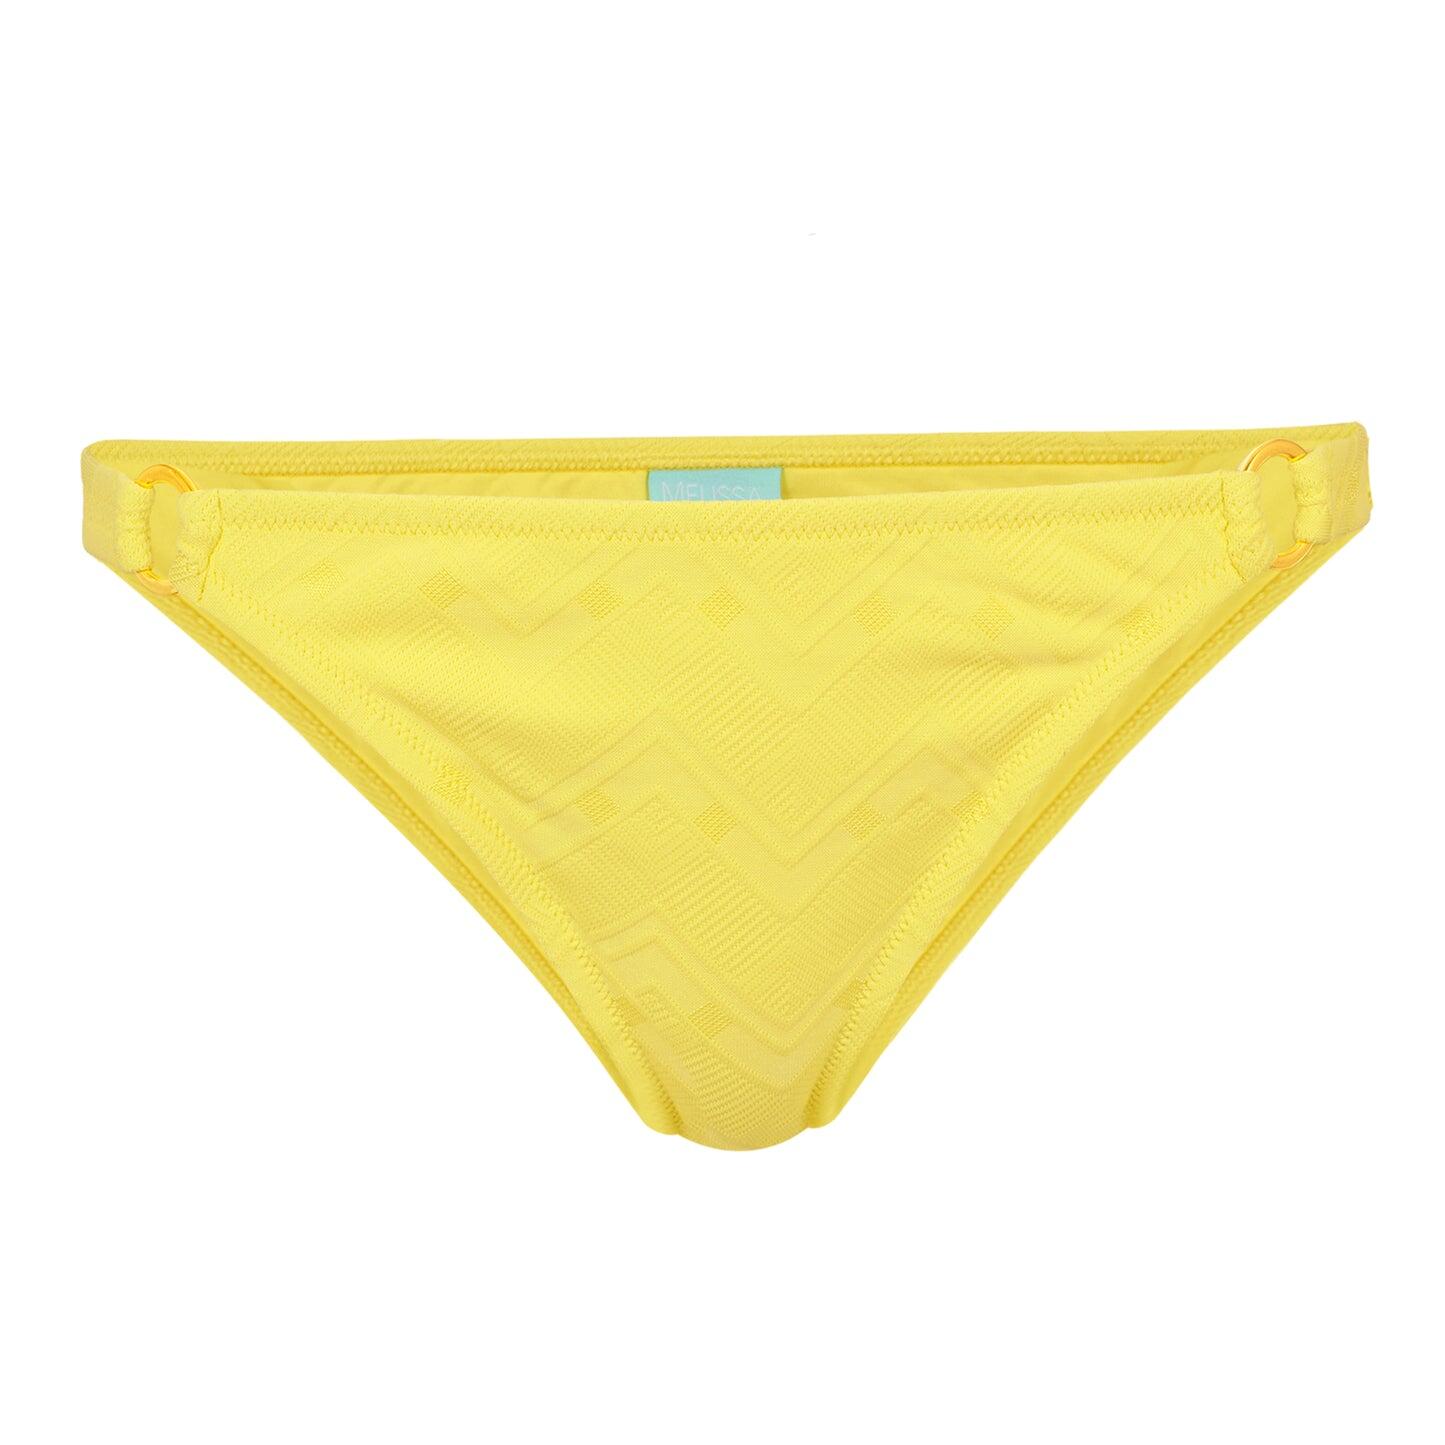 Montenegro Zigzag Lemon Bikini Bottom